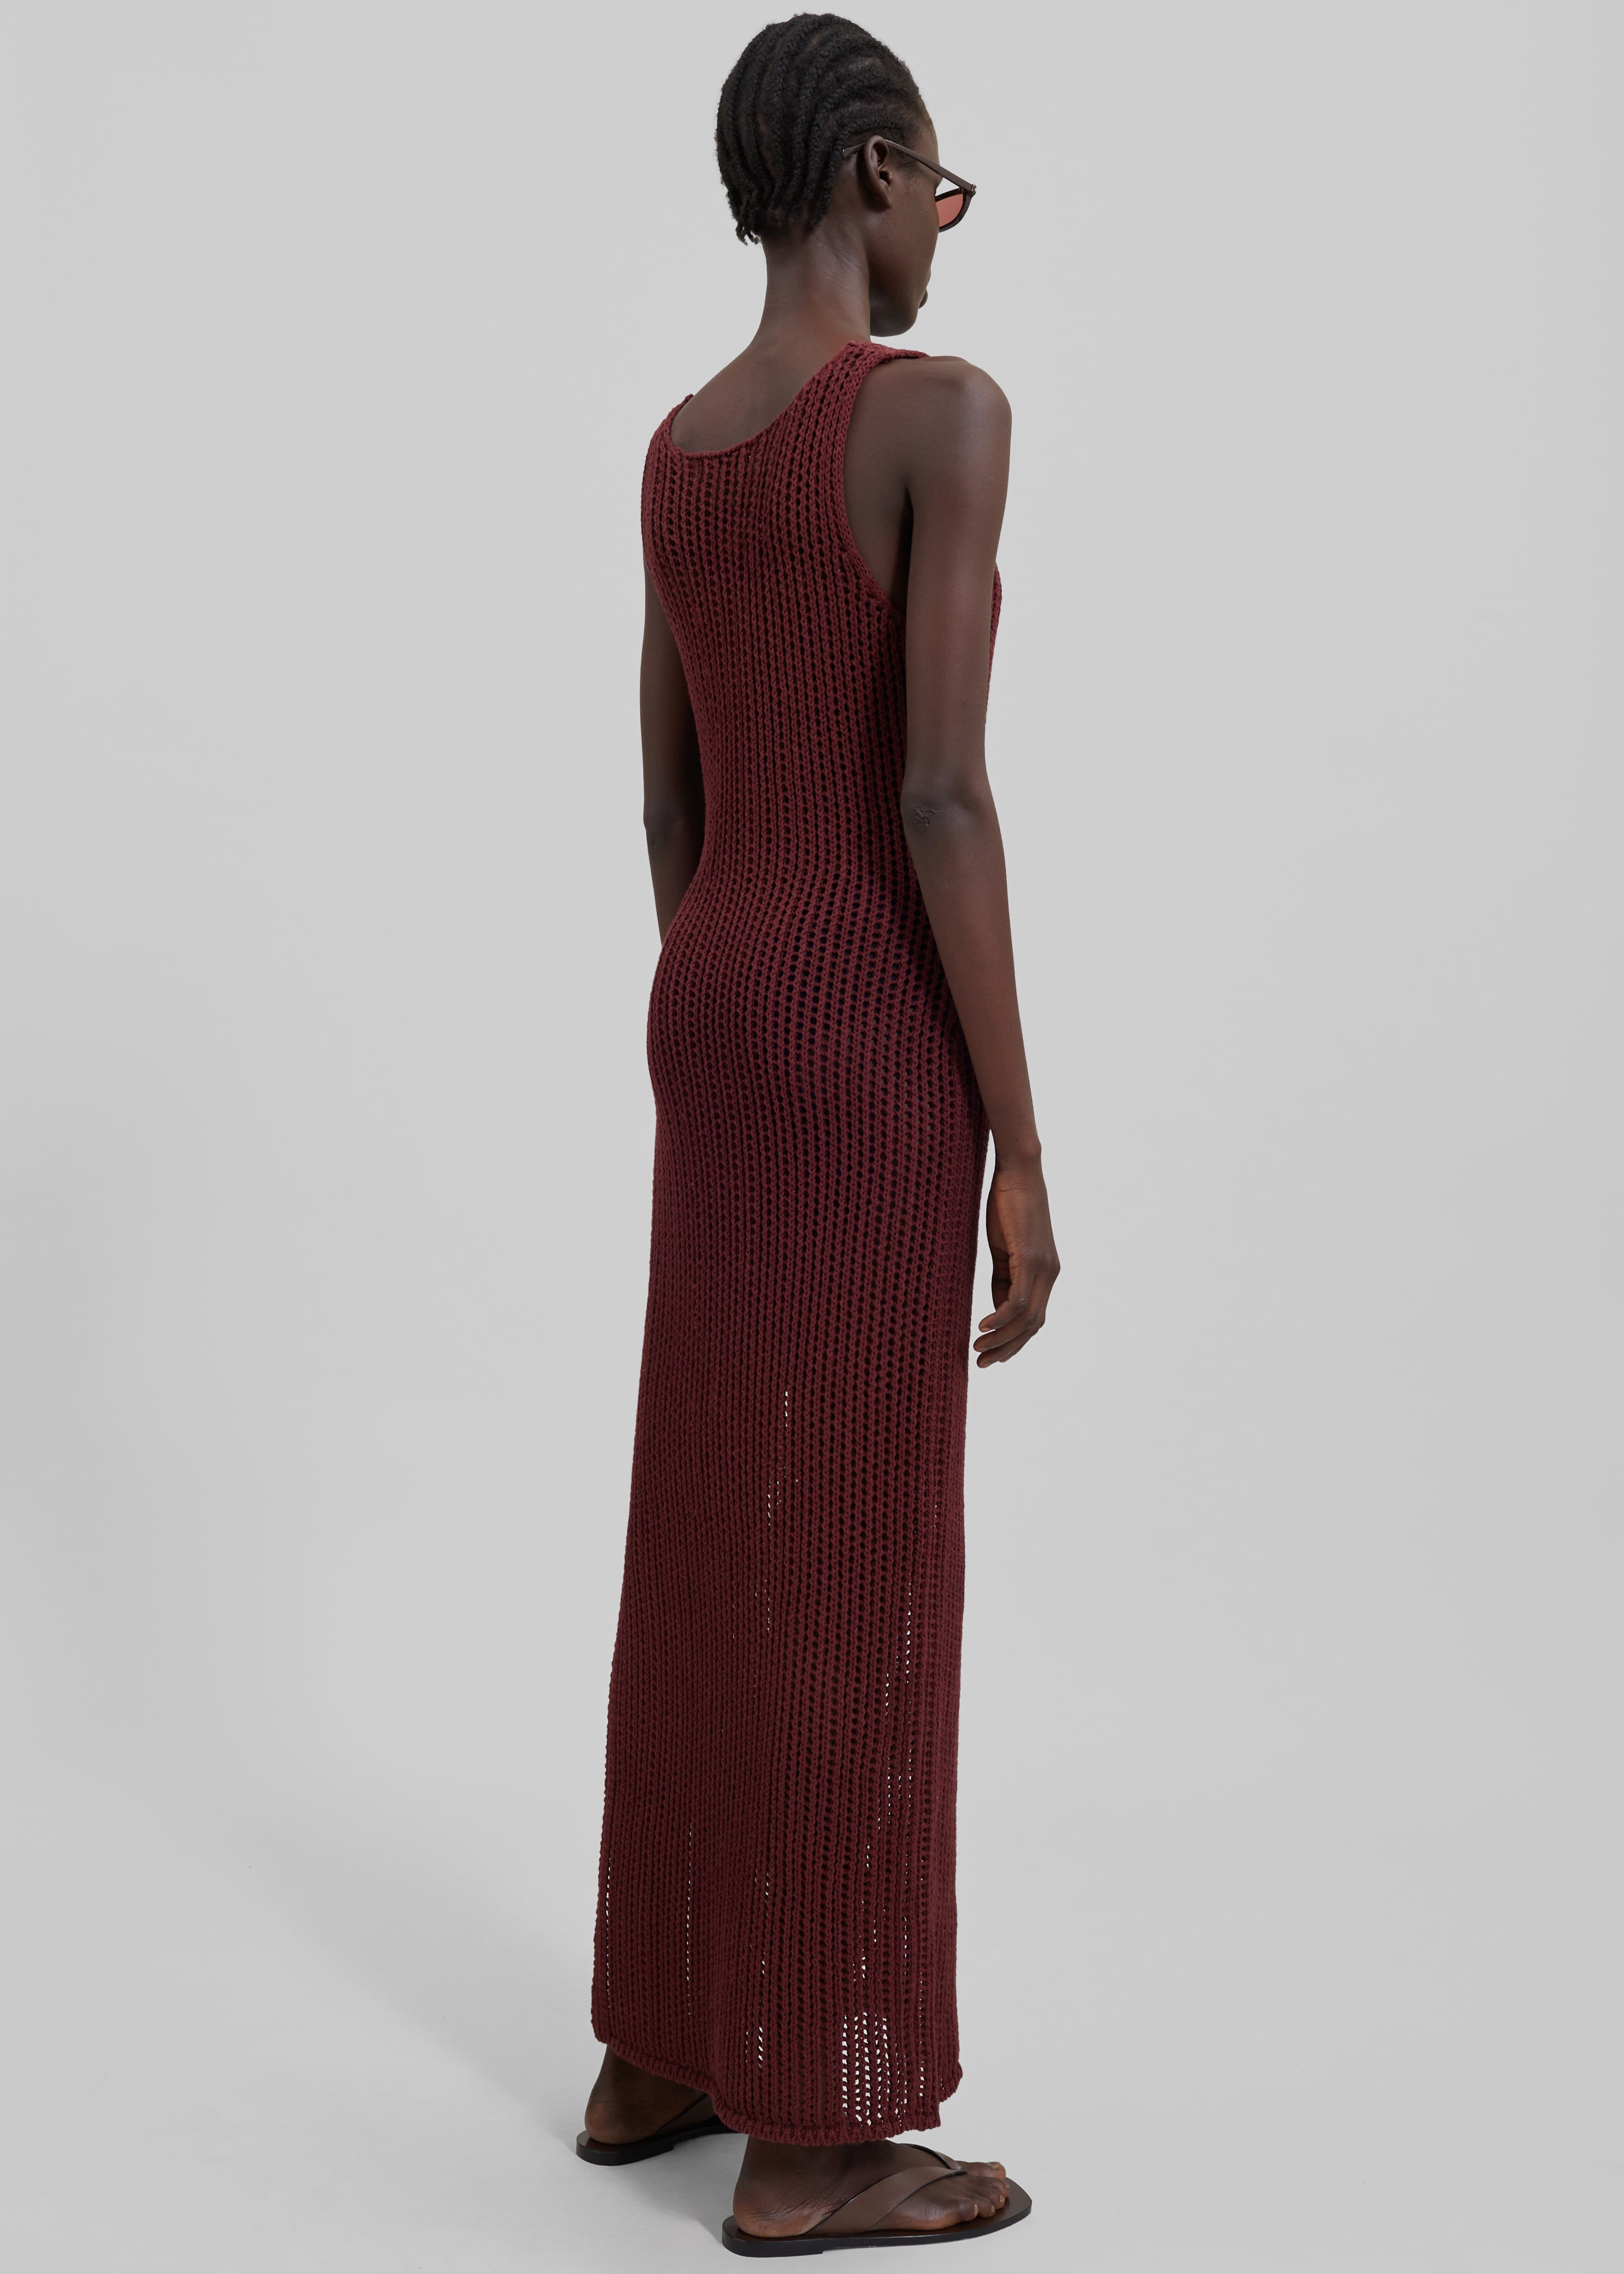 Adrienna Crochet Maxi Dress - Burgundy - 8